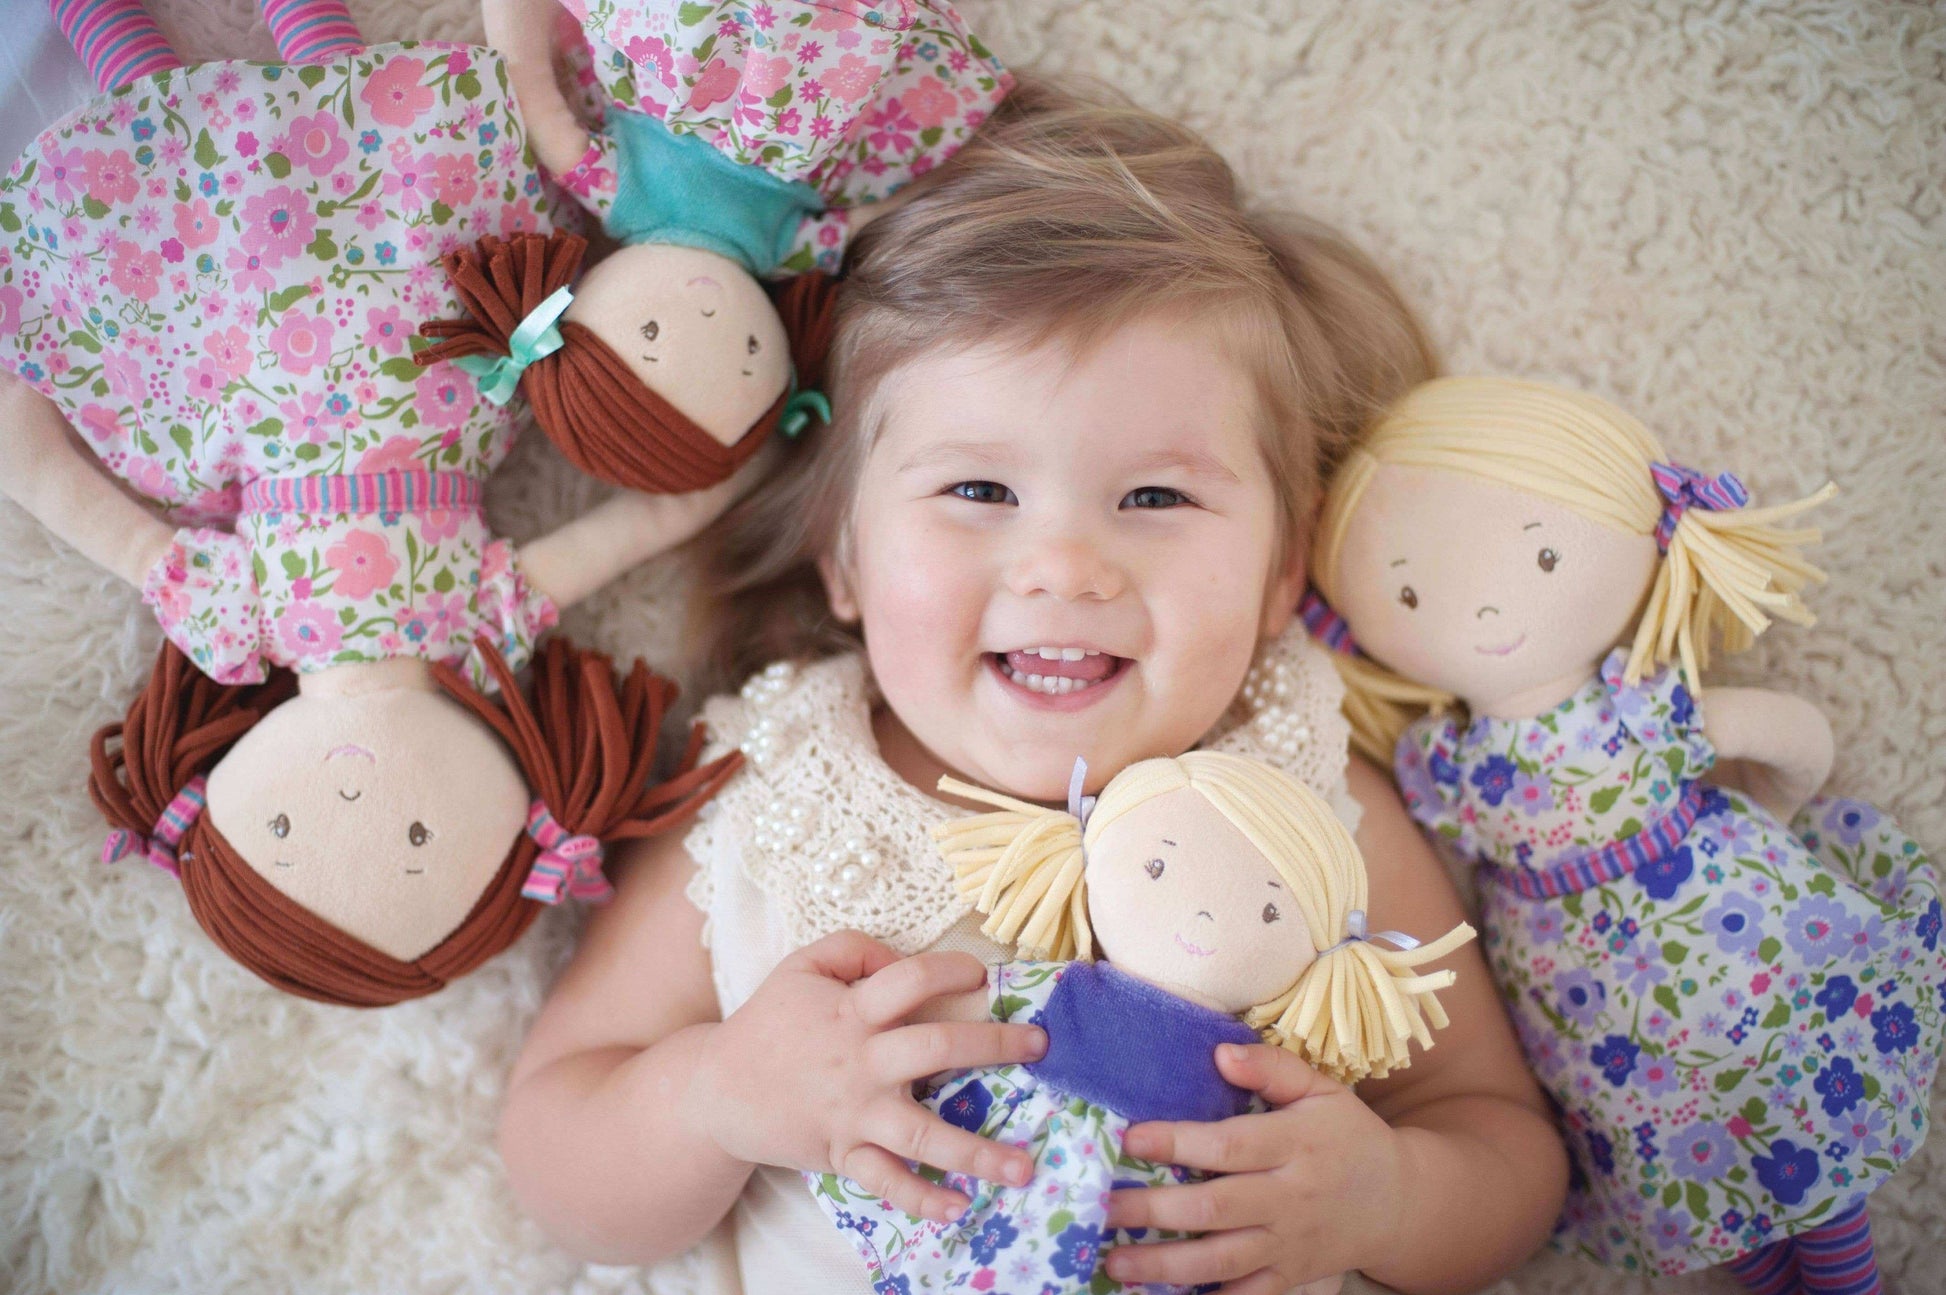 Peggy - Blonde Hair with Purple and Pink Dress, Tikiri Toys, eco-friendly Toys, Mountain Kids Toys